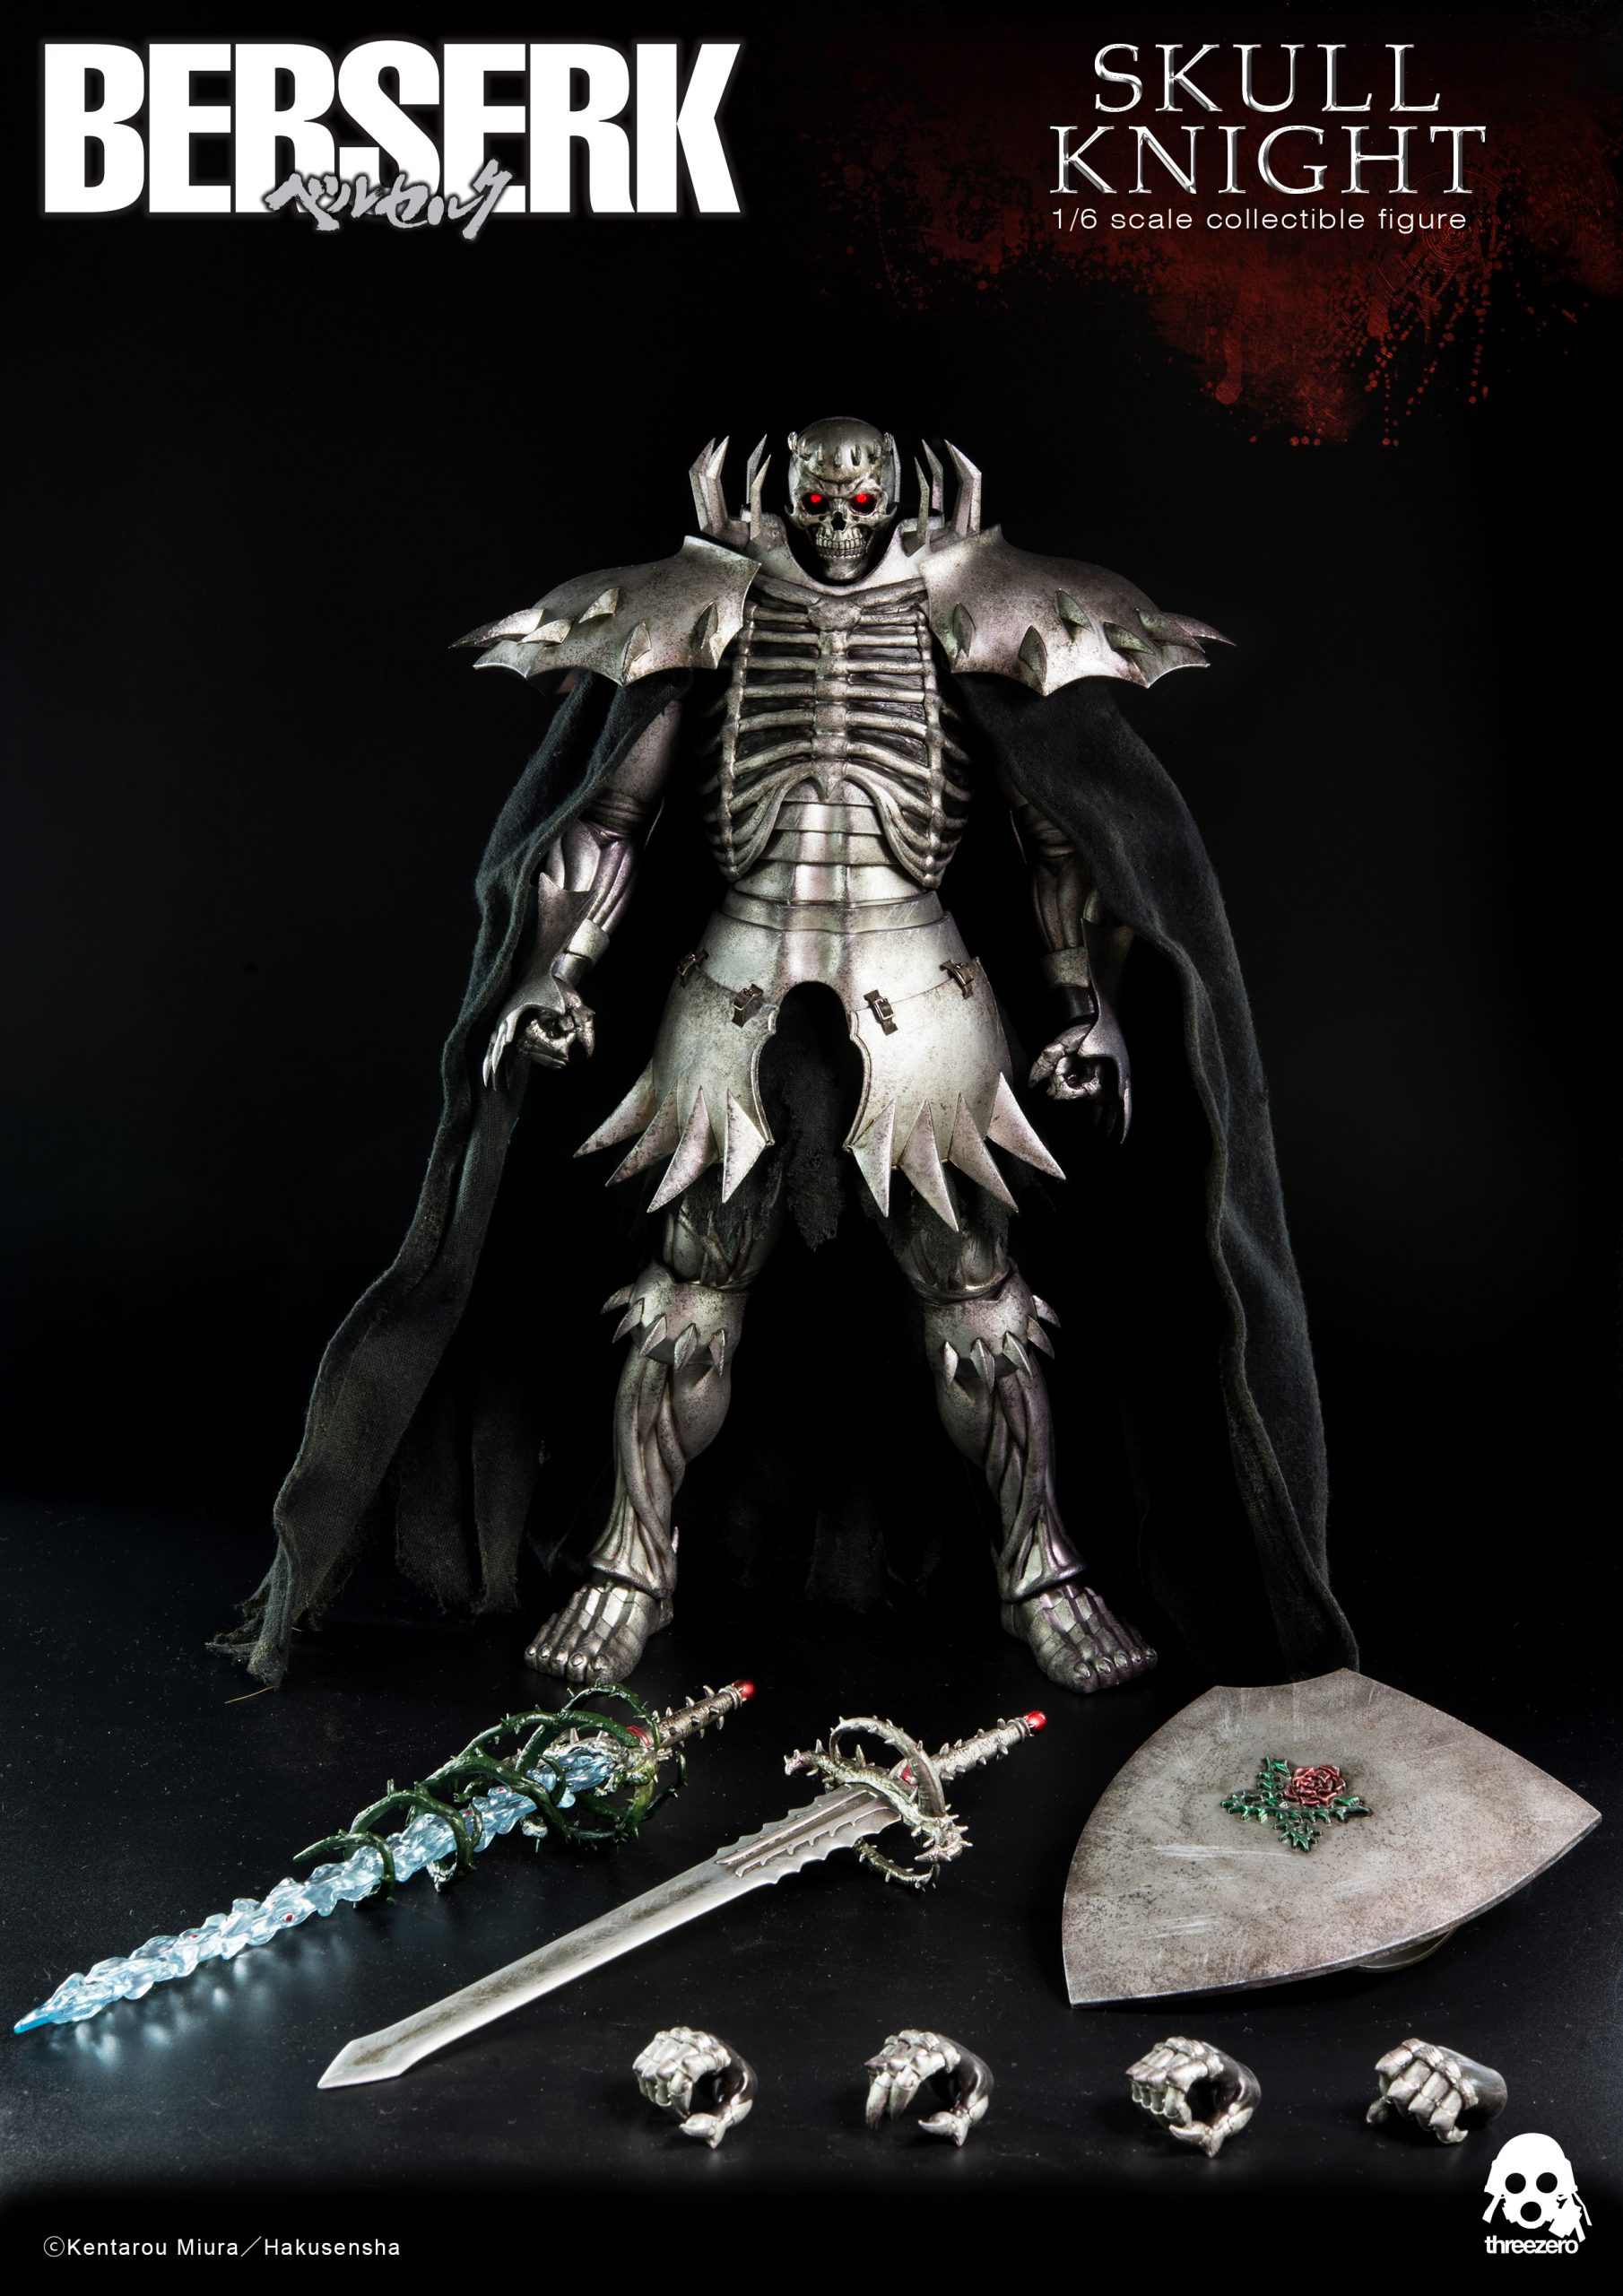 BERSERK, Skull Knight Exclusive Version